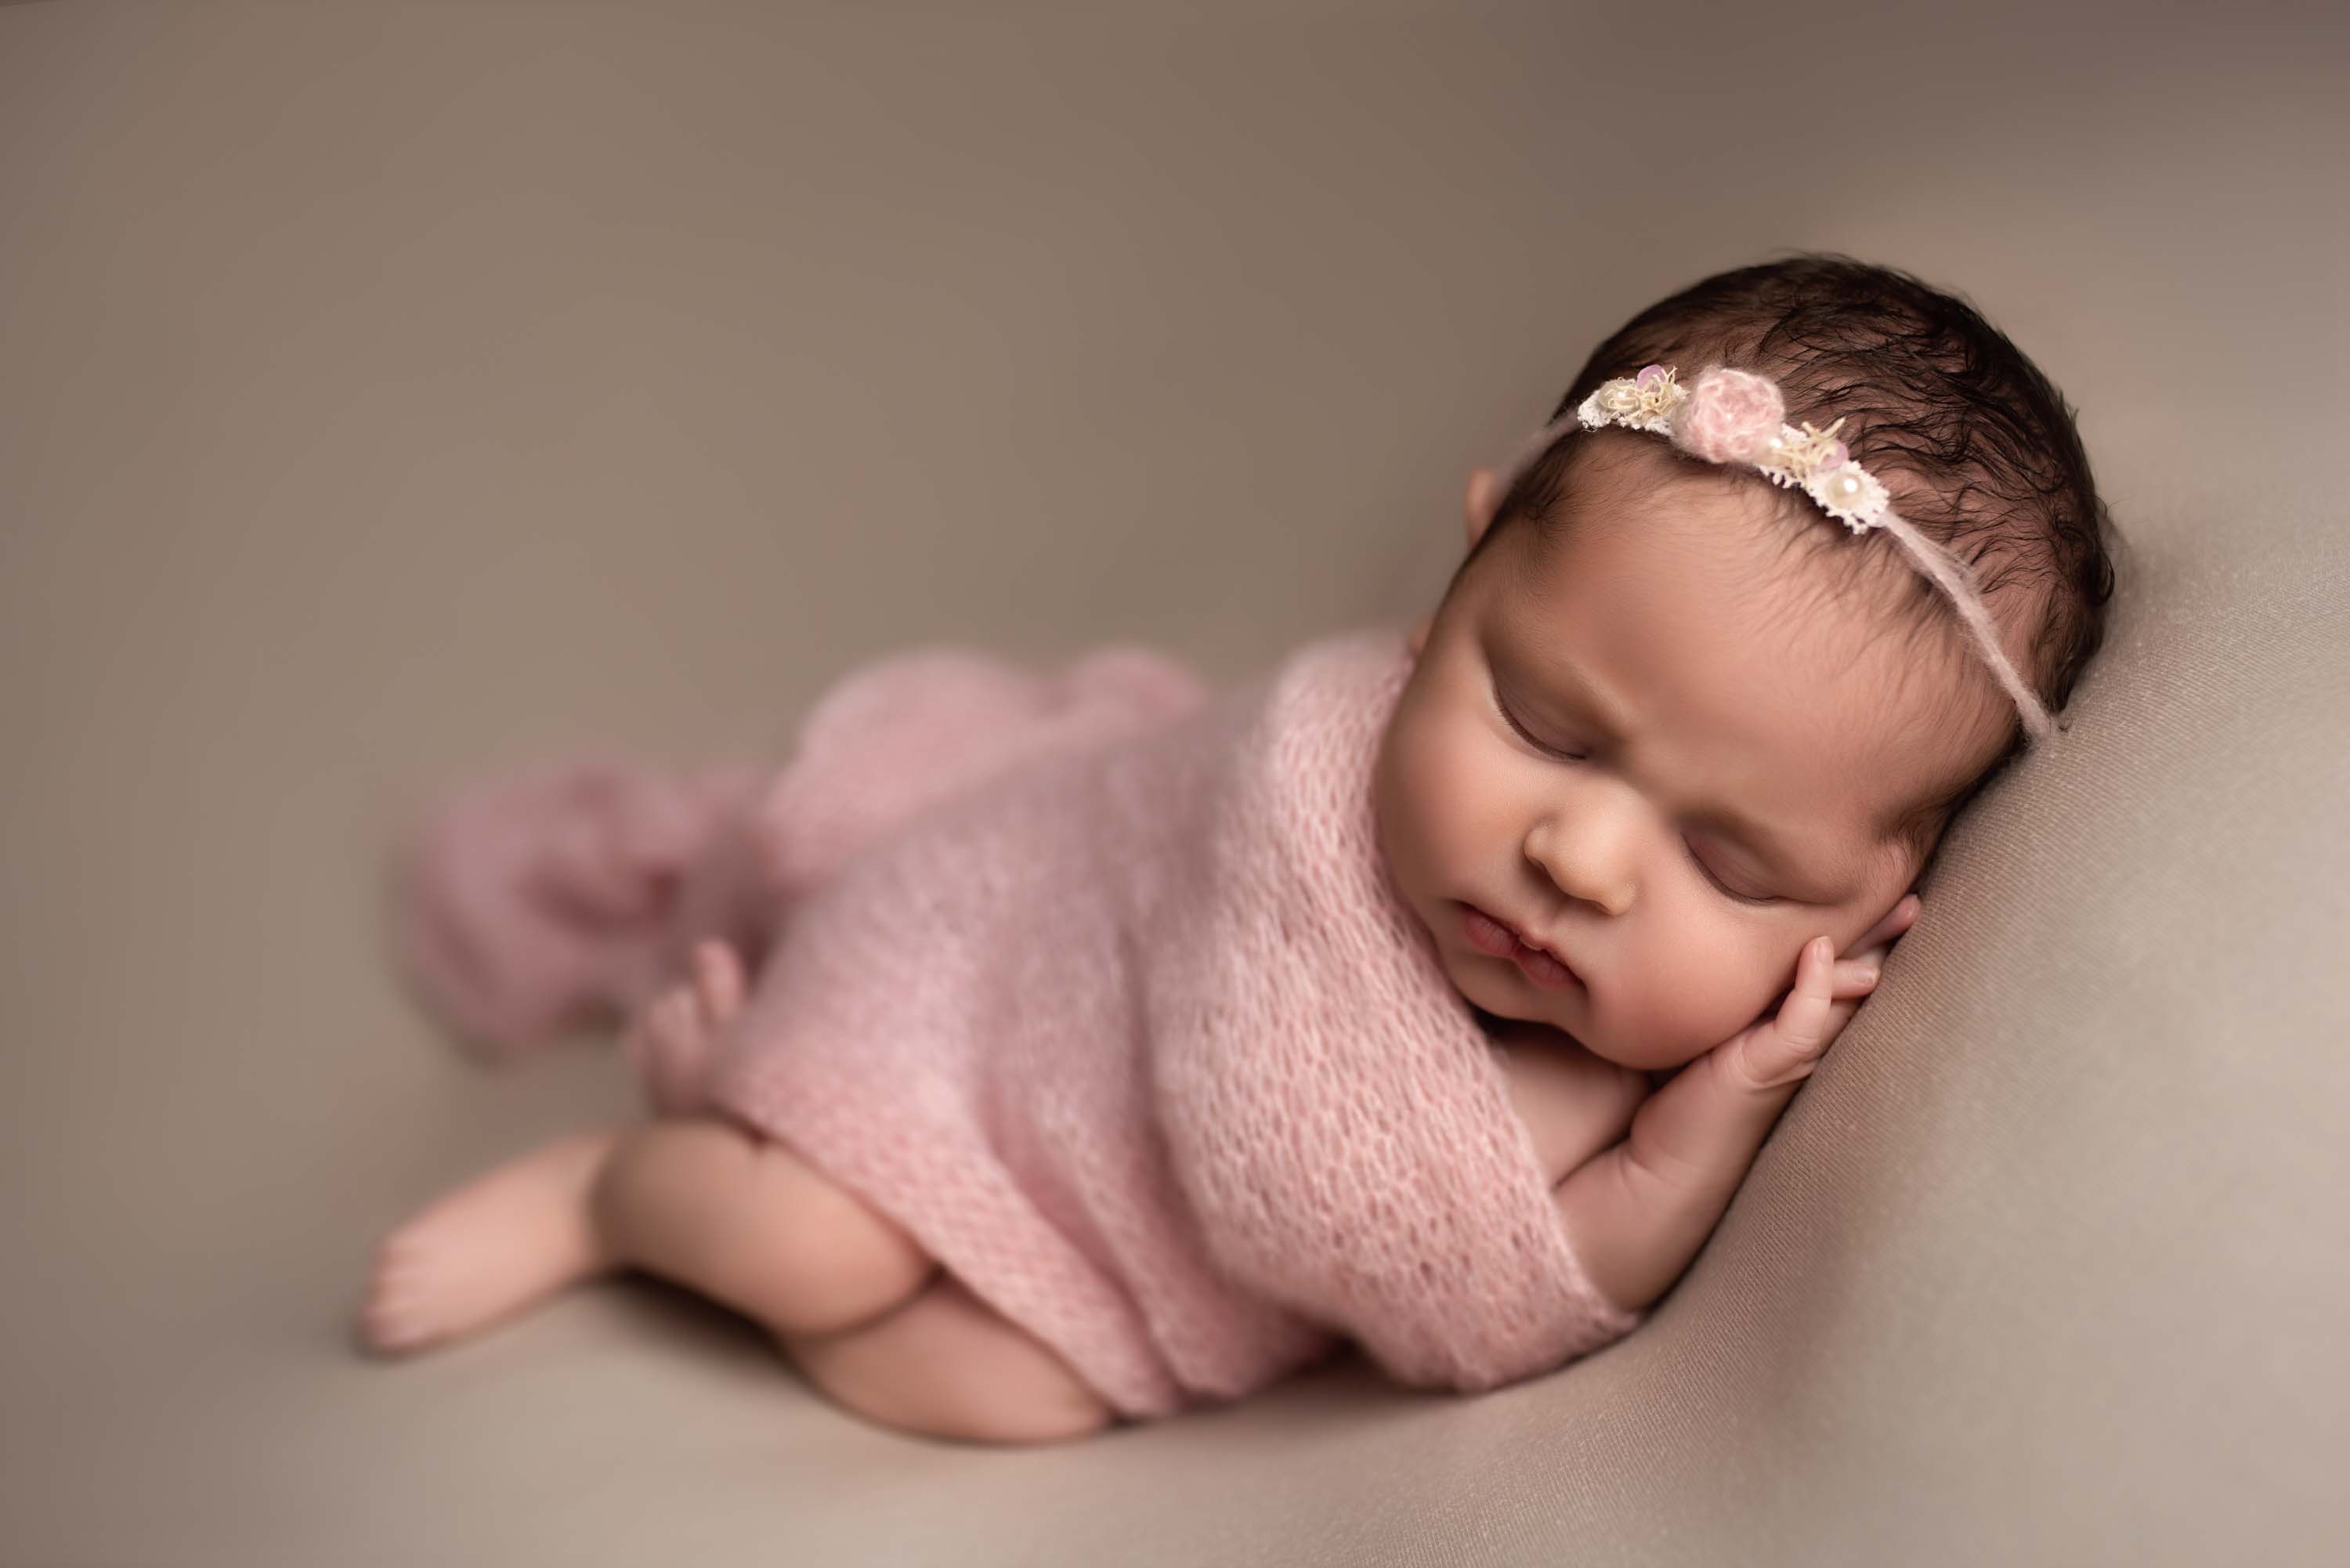 Newborn baby girl with pink headband and blanket